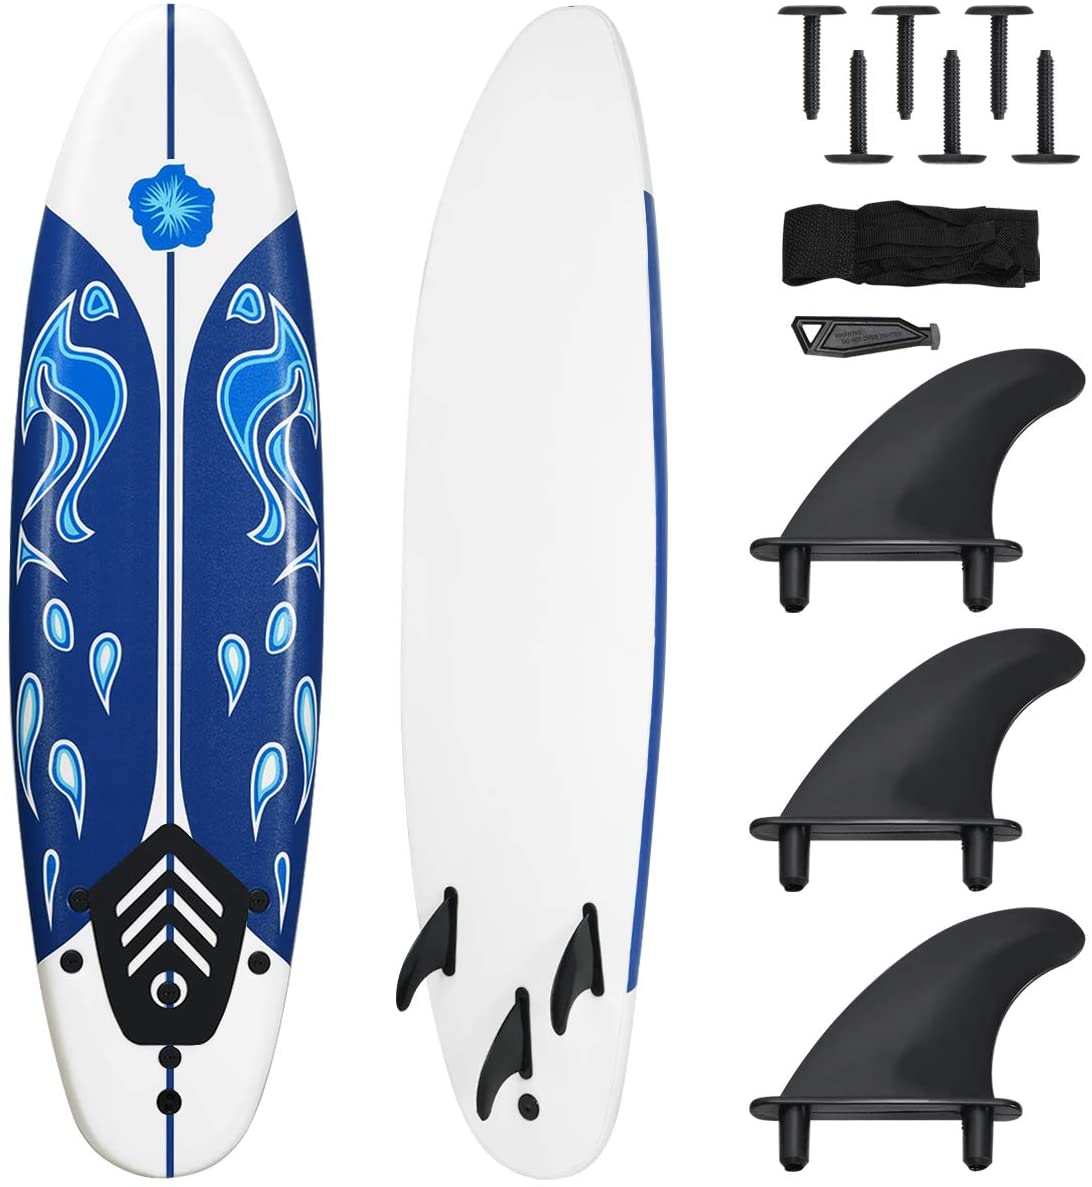 Giantex 6-Foot Stand Up Surfboard